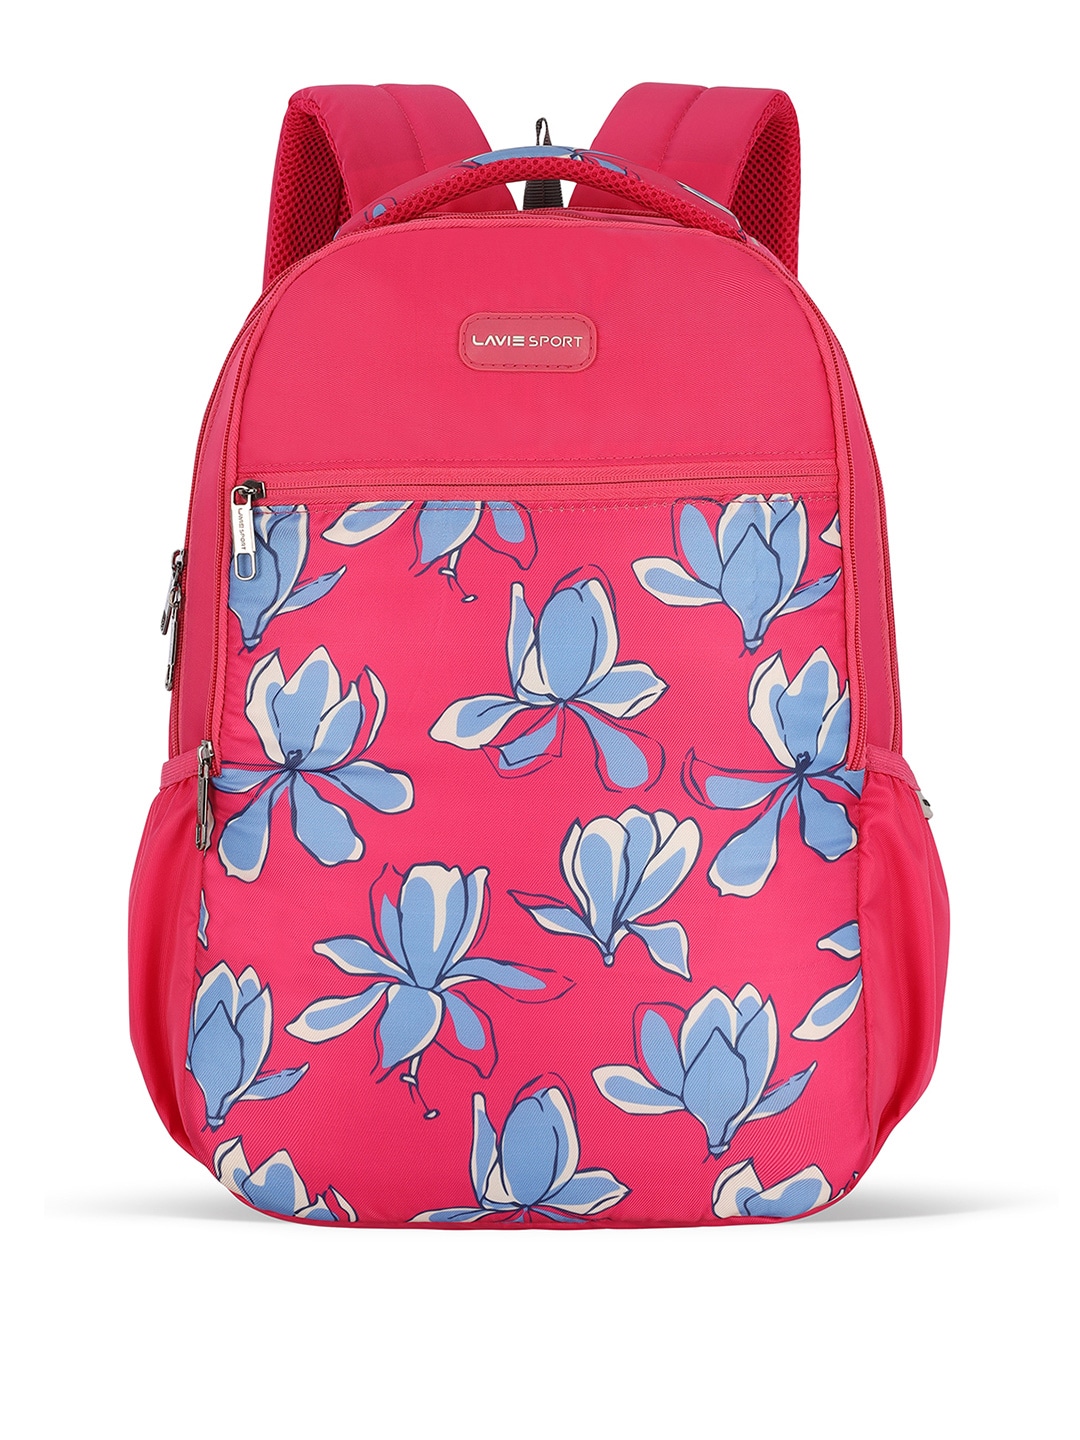 LAVIE SPORT Floral Printed Backpack